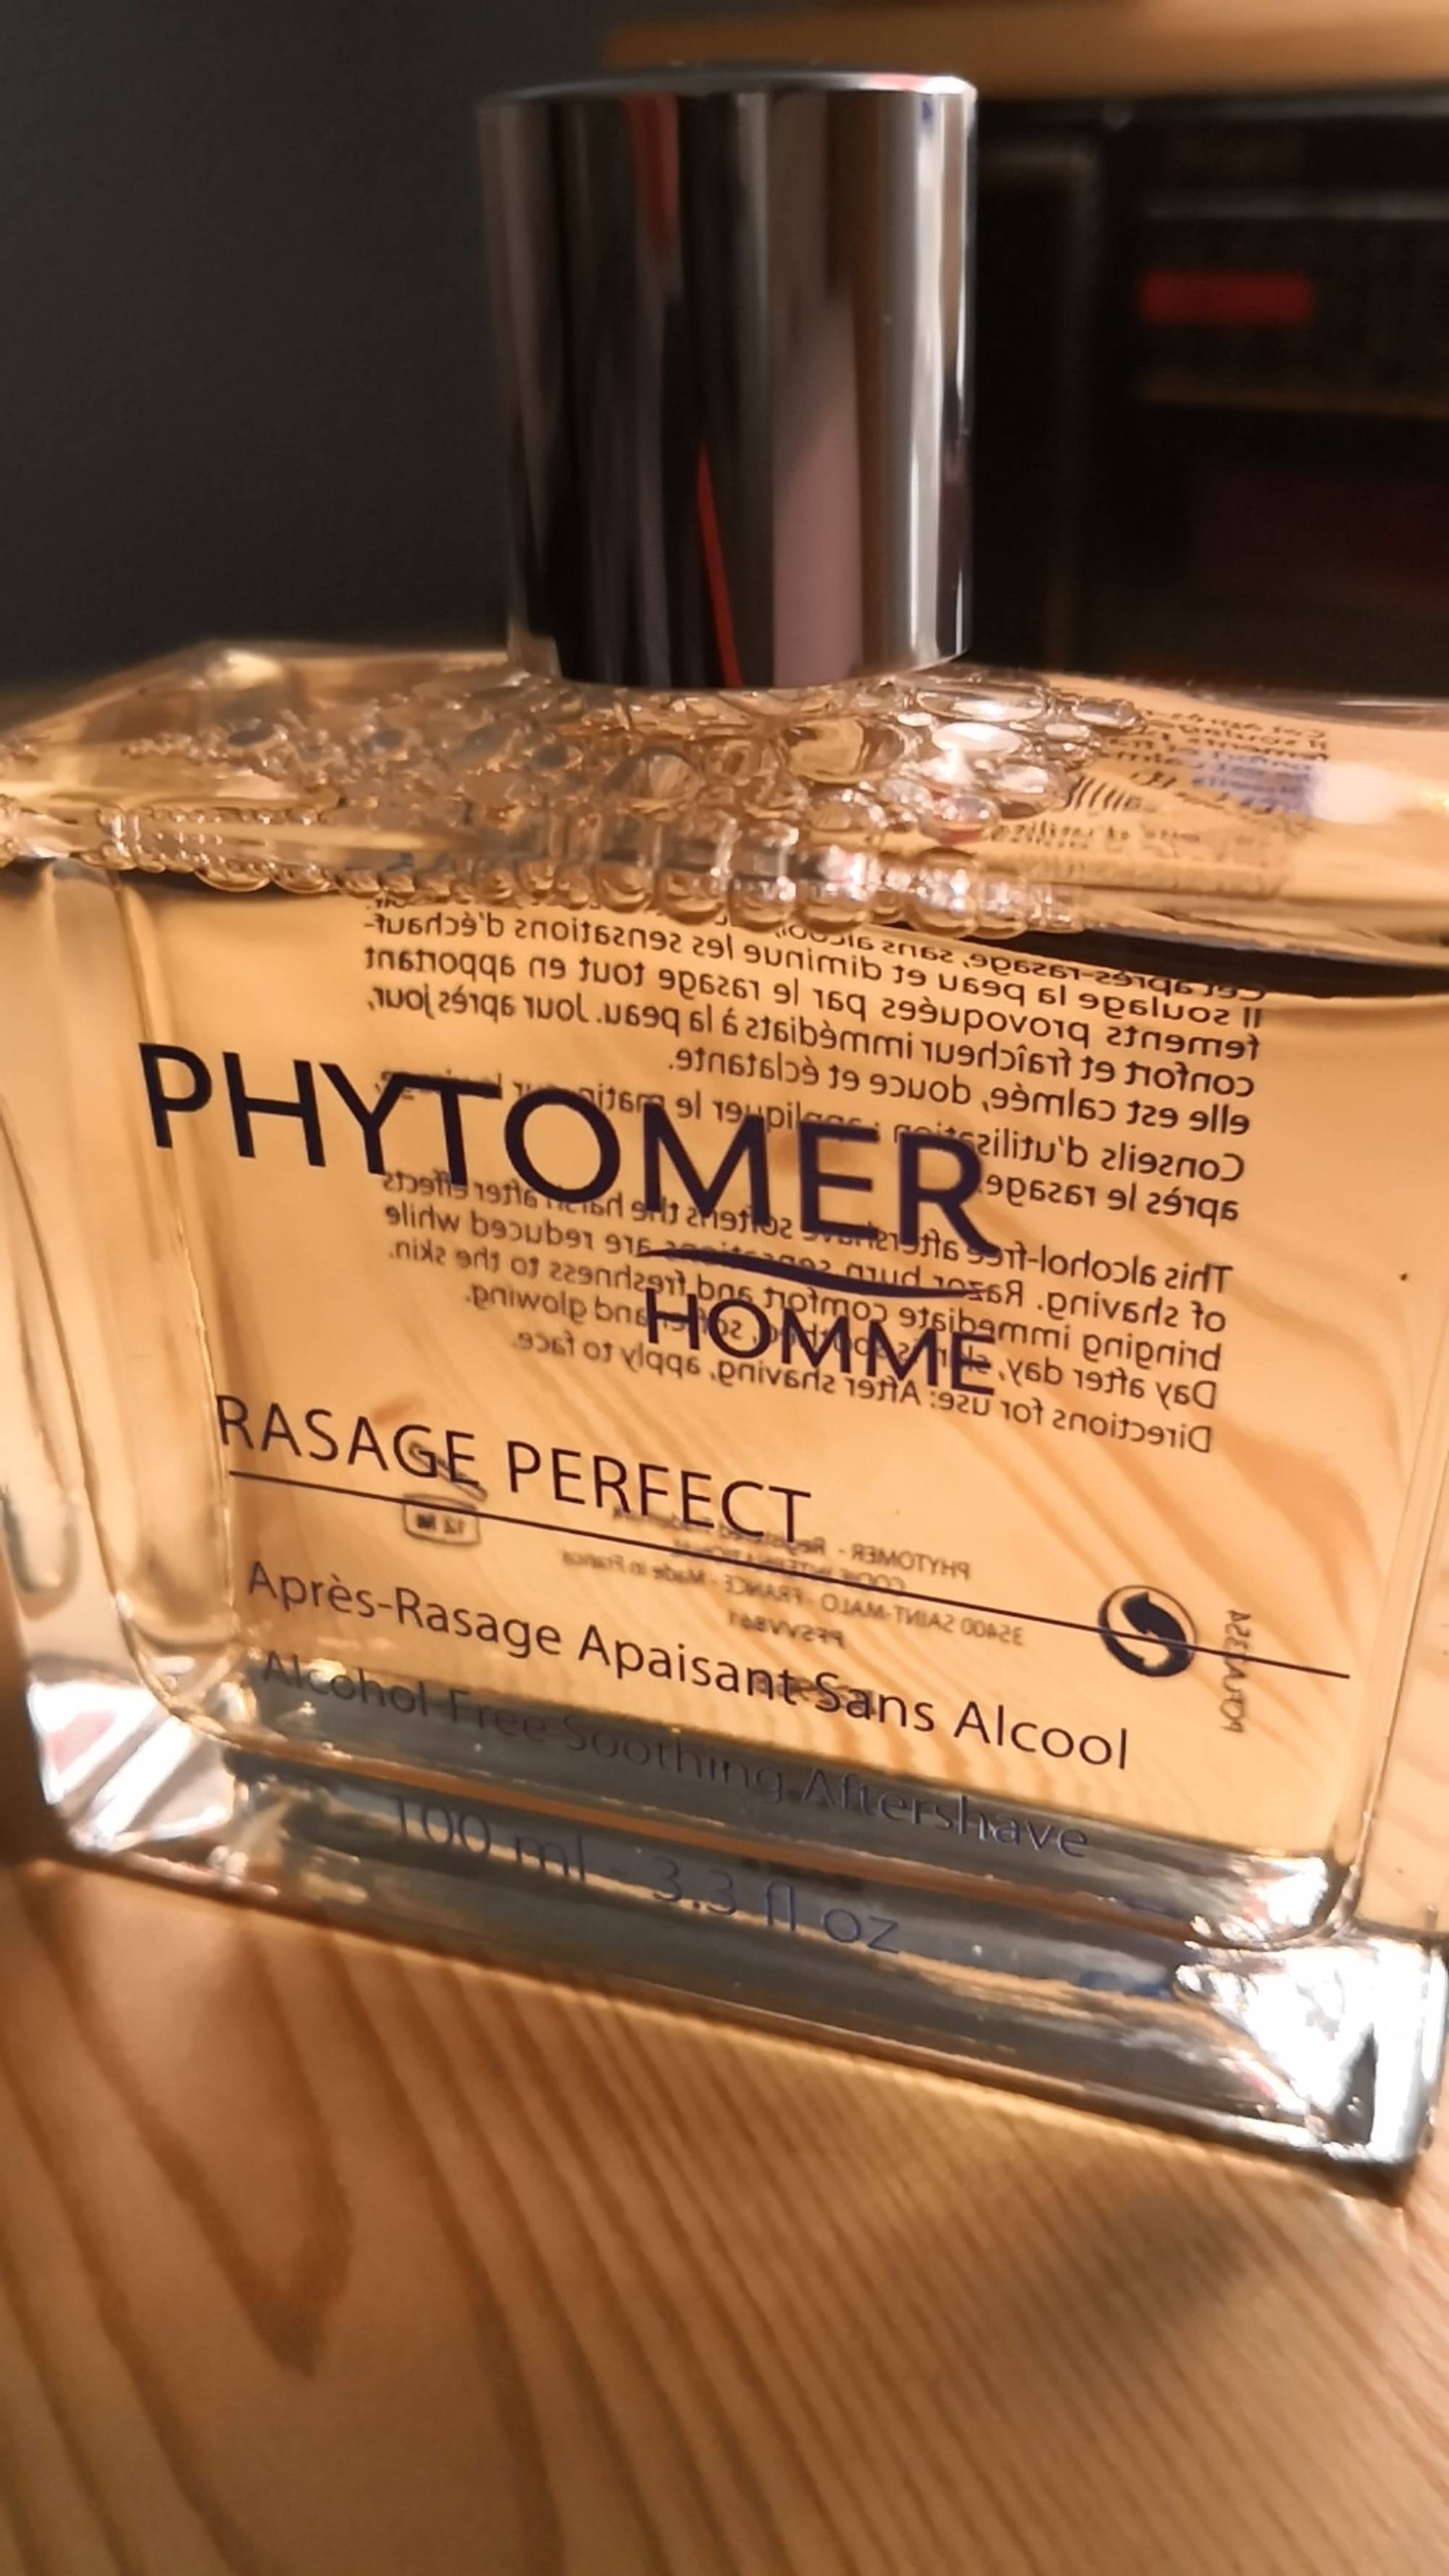 PHYTOMER - Homme Rasage perfect - Après-rasage apaisante sans alcool